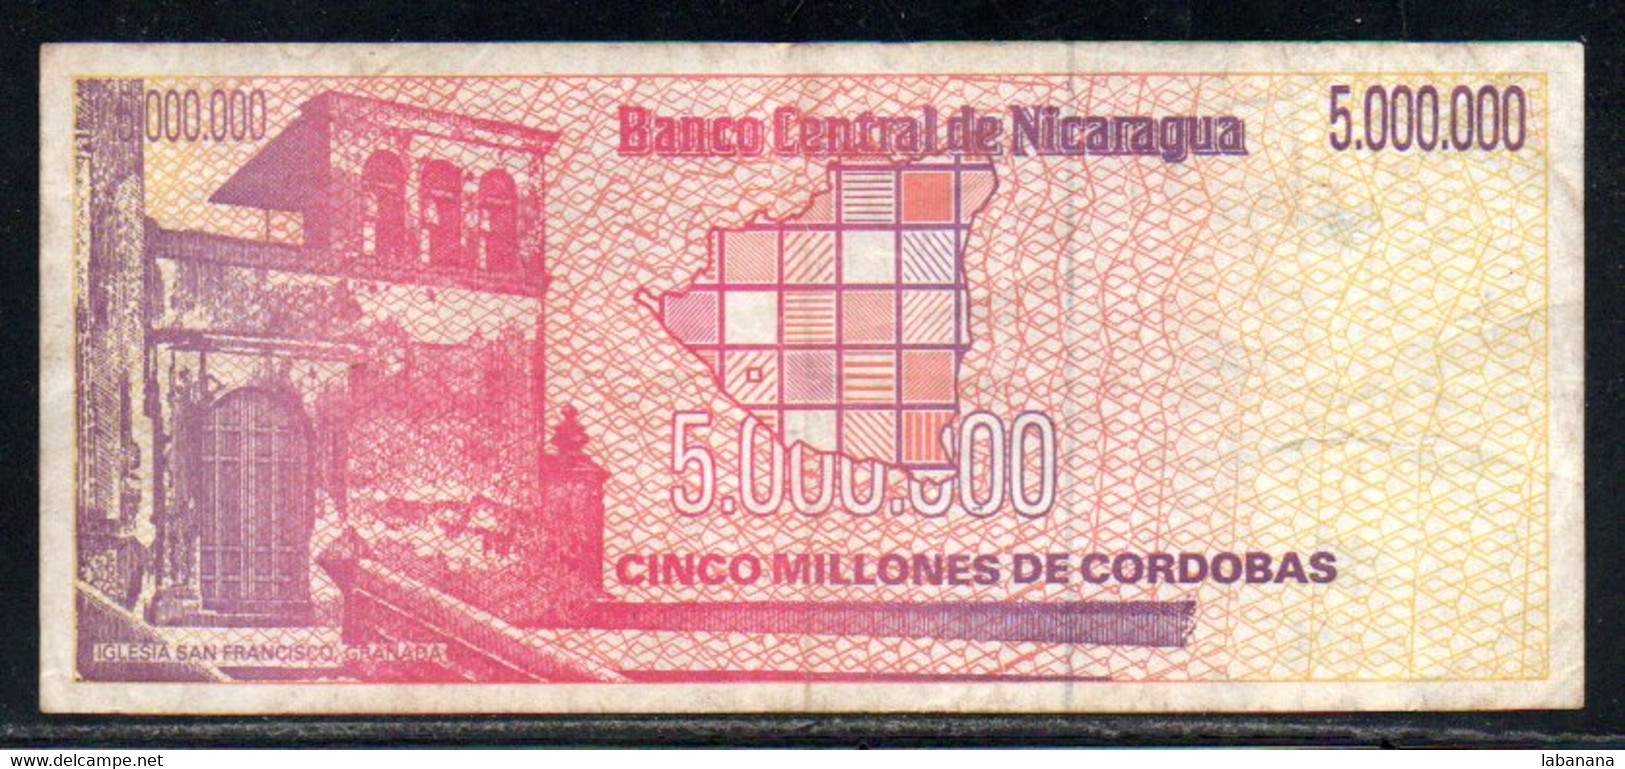 659-Nicaragua 5 000 000 De Cordobas 1990 FB151 - Nicaragua